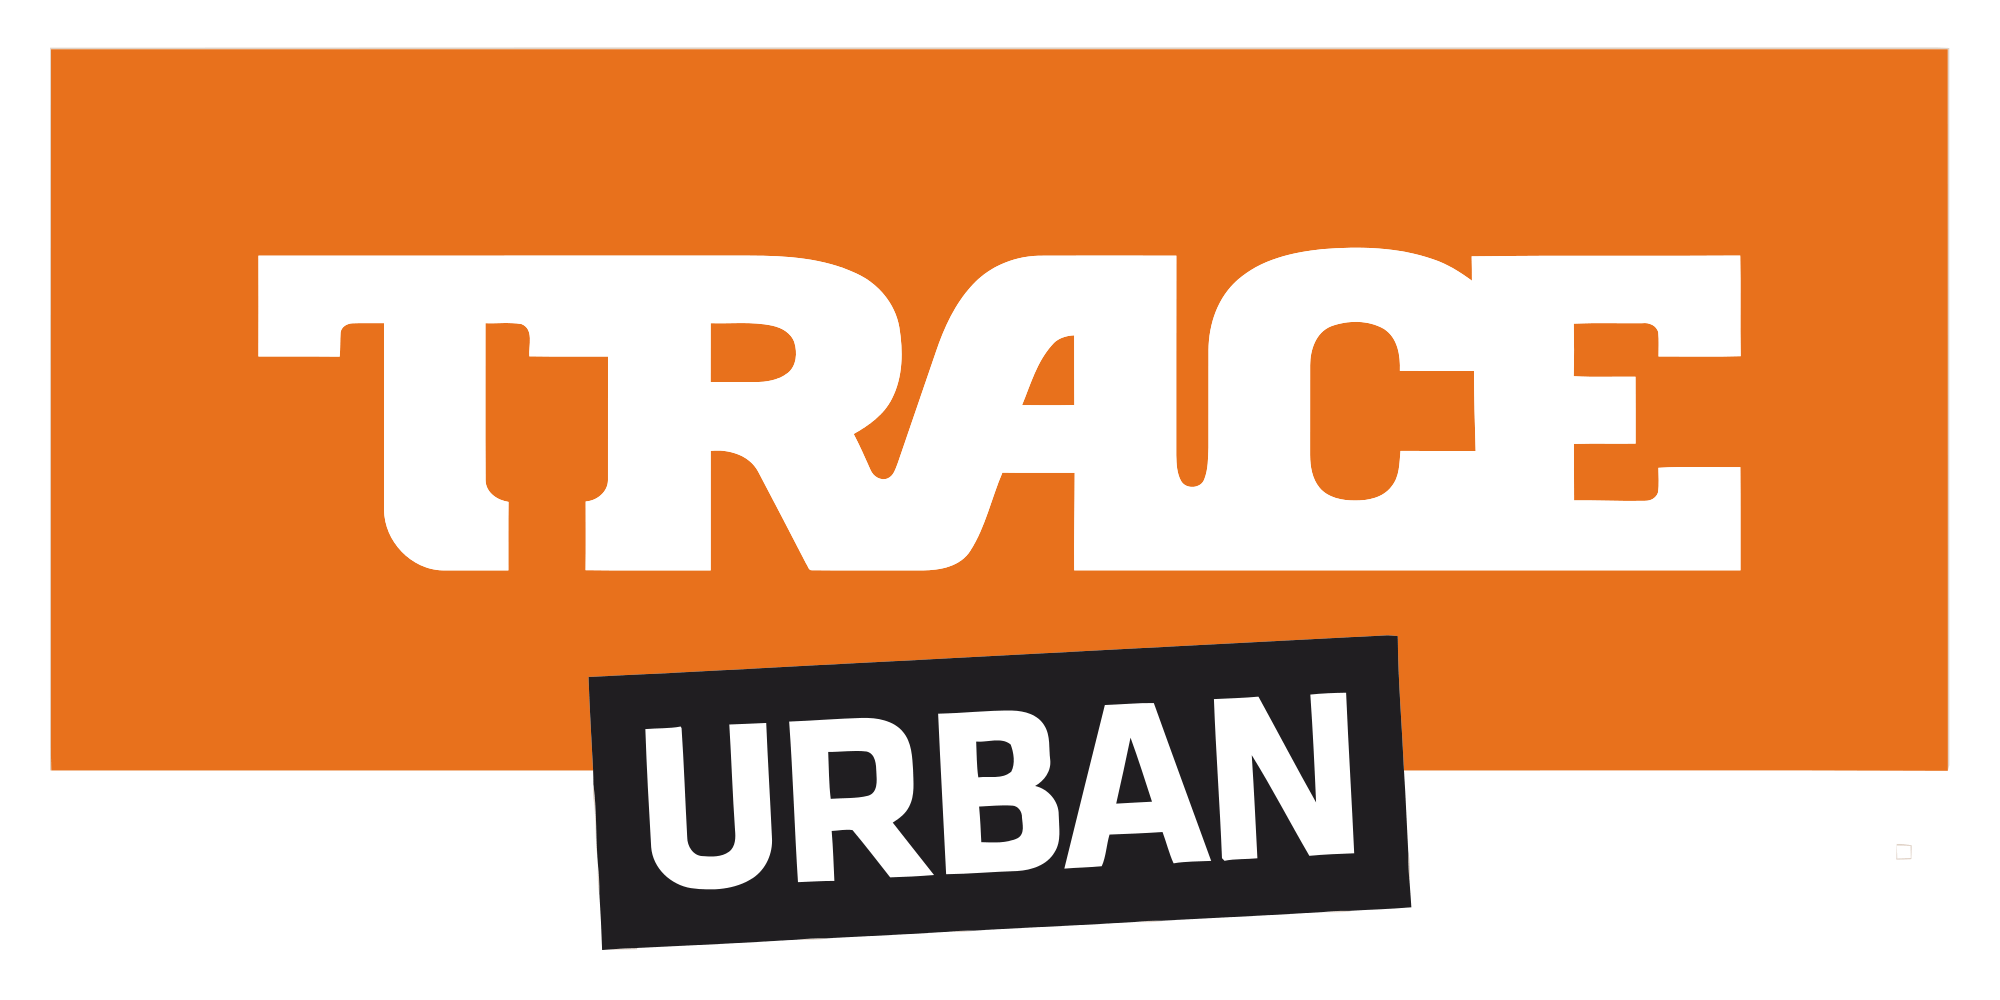 Urban Instagram Logo - File:Trace Urban logo 2010.svg - Wikimedia Commons